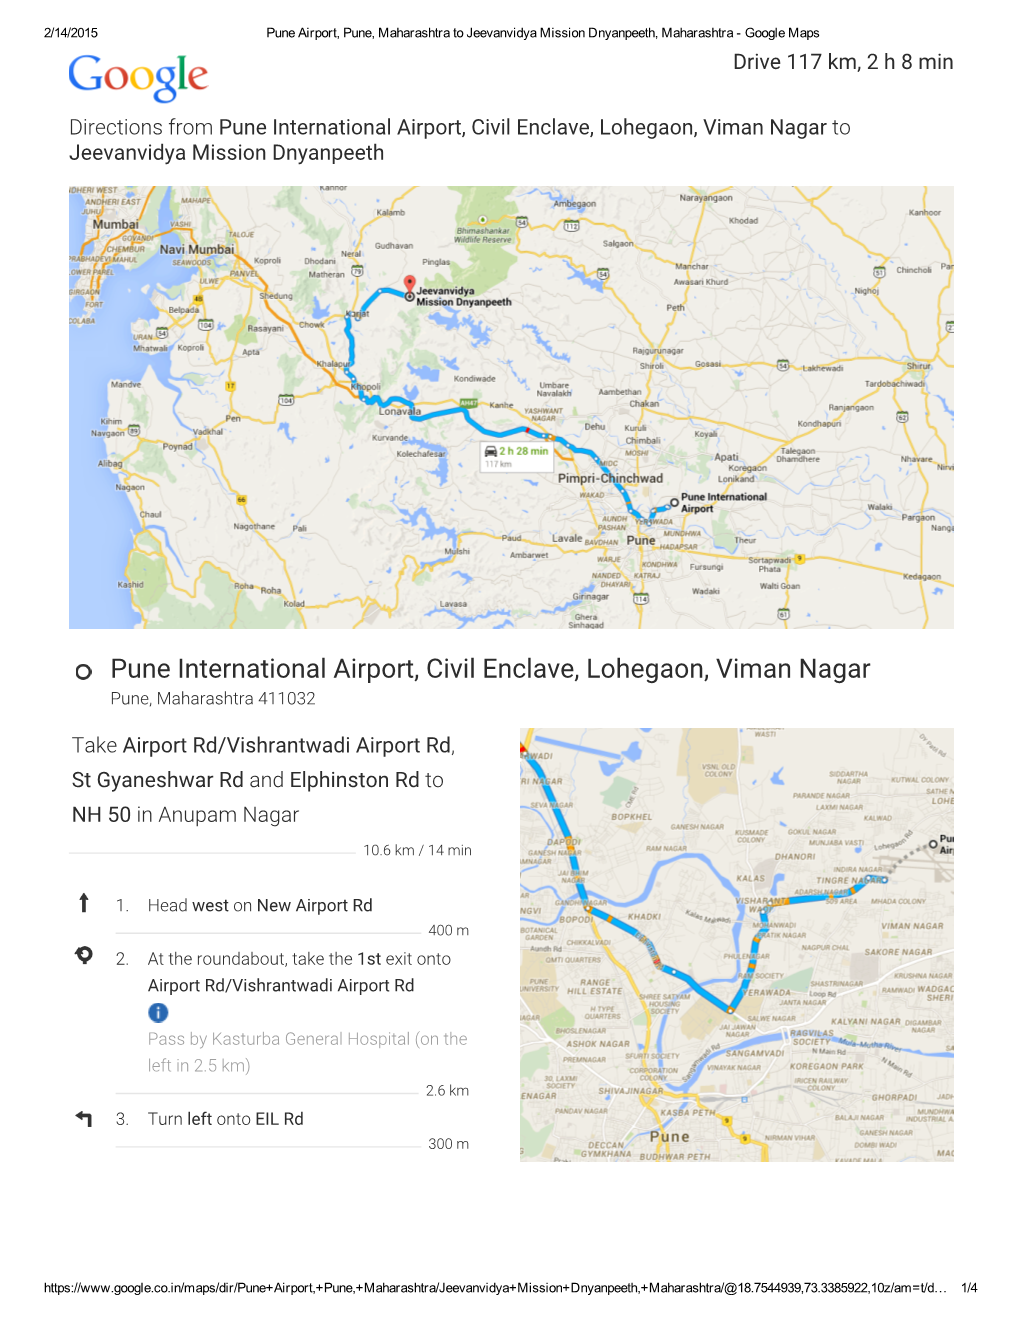 Pune International Airport, Civil Enclave, Lohegaon, Viman Nagar to Jeevanvidya Mission Dnyanpeeth